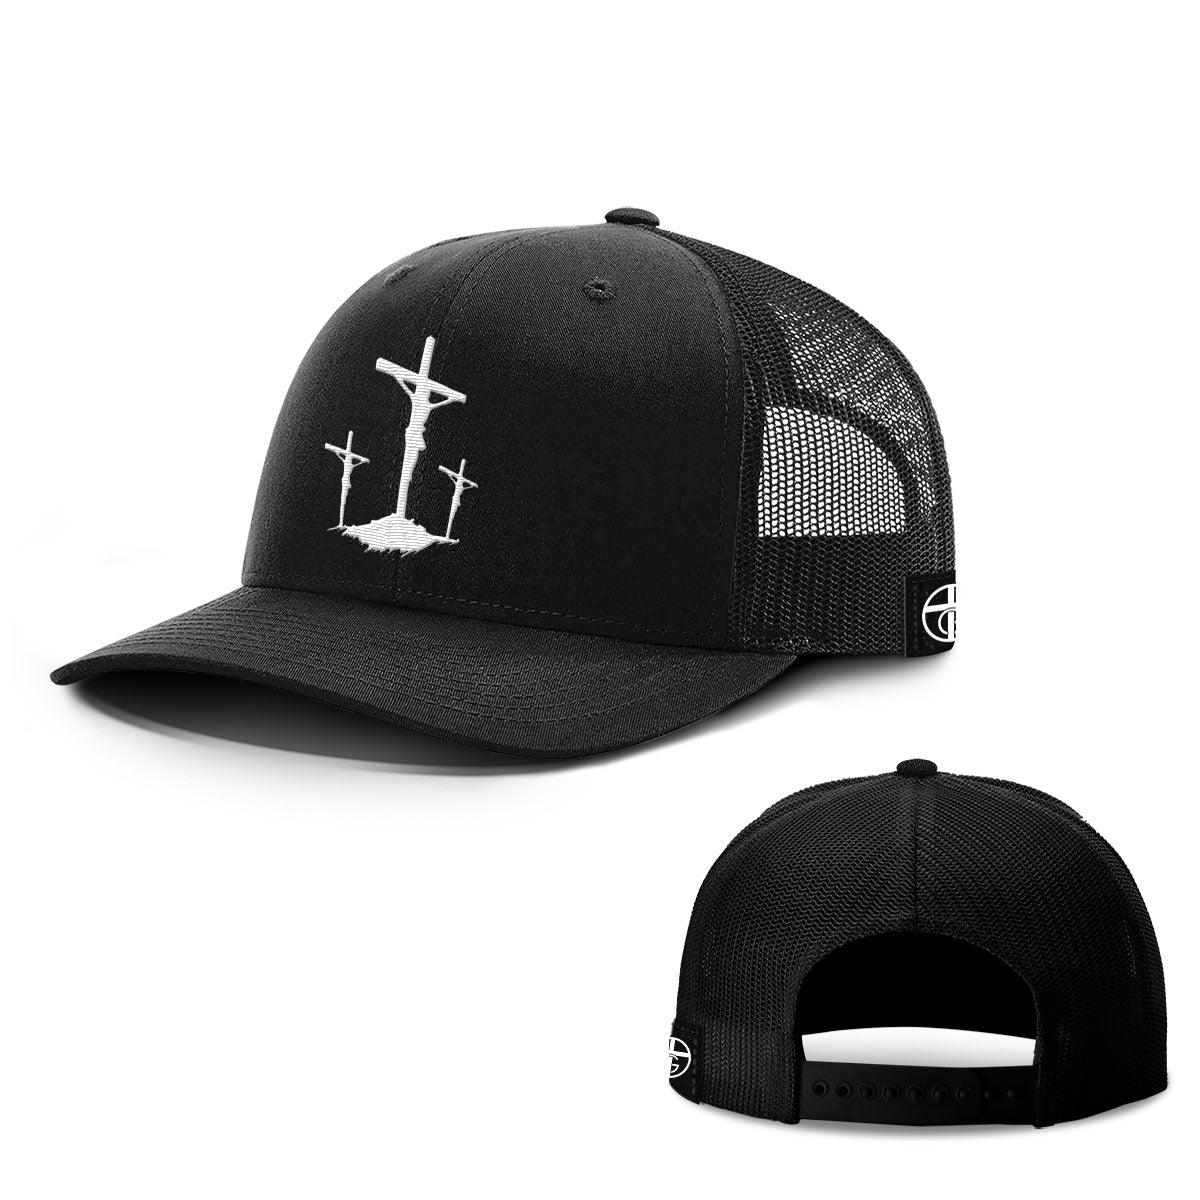 Three Crosses Hats